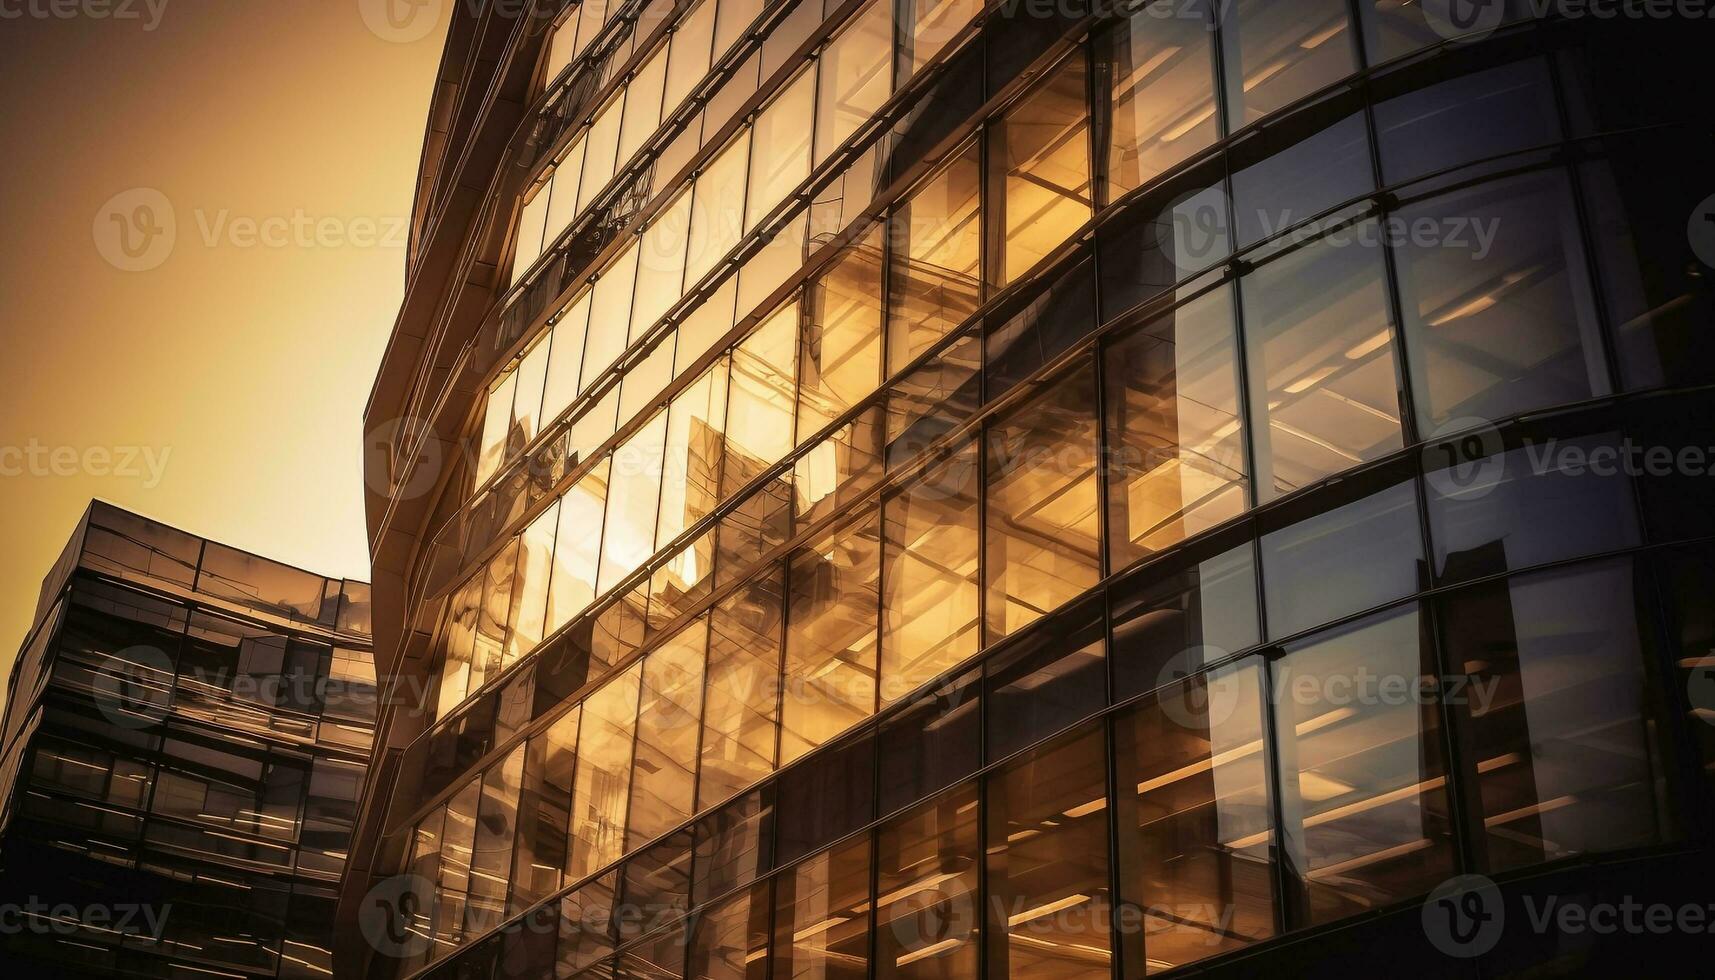 Futuristic skyscraper reflects vibrant city life at dusk generated by AI photo